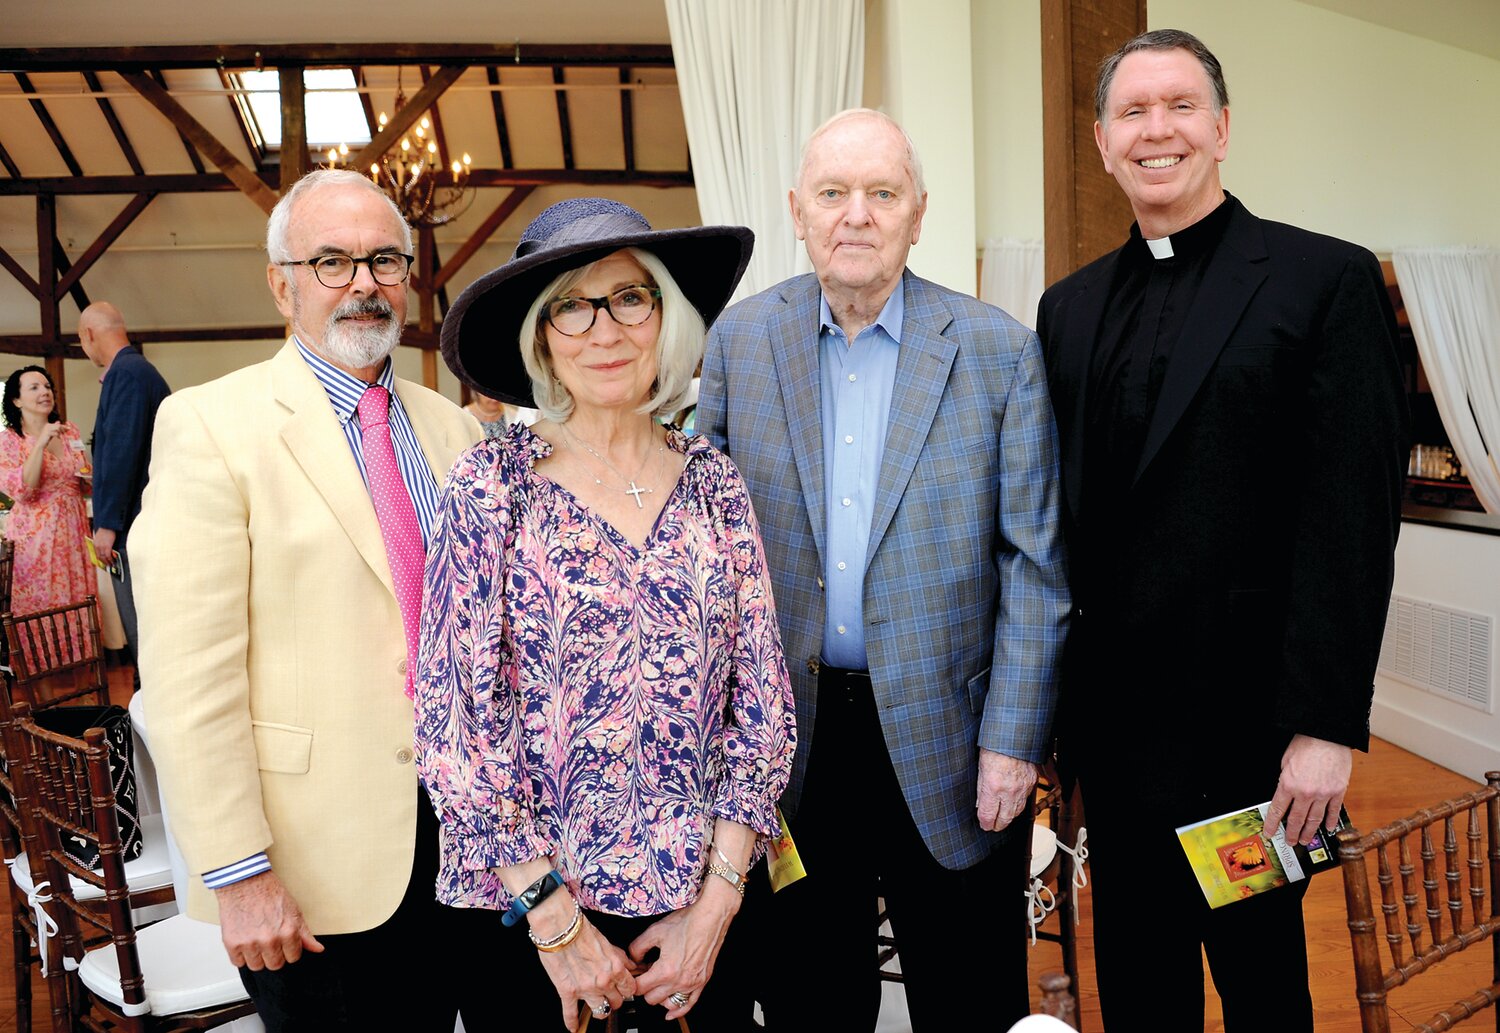 Steve Darlington, Helen Mathern, Jack McCaughan and the Rev. Matt Gunckin.